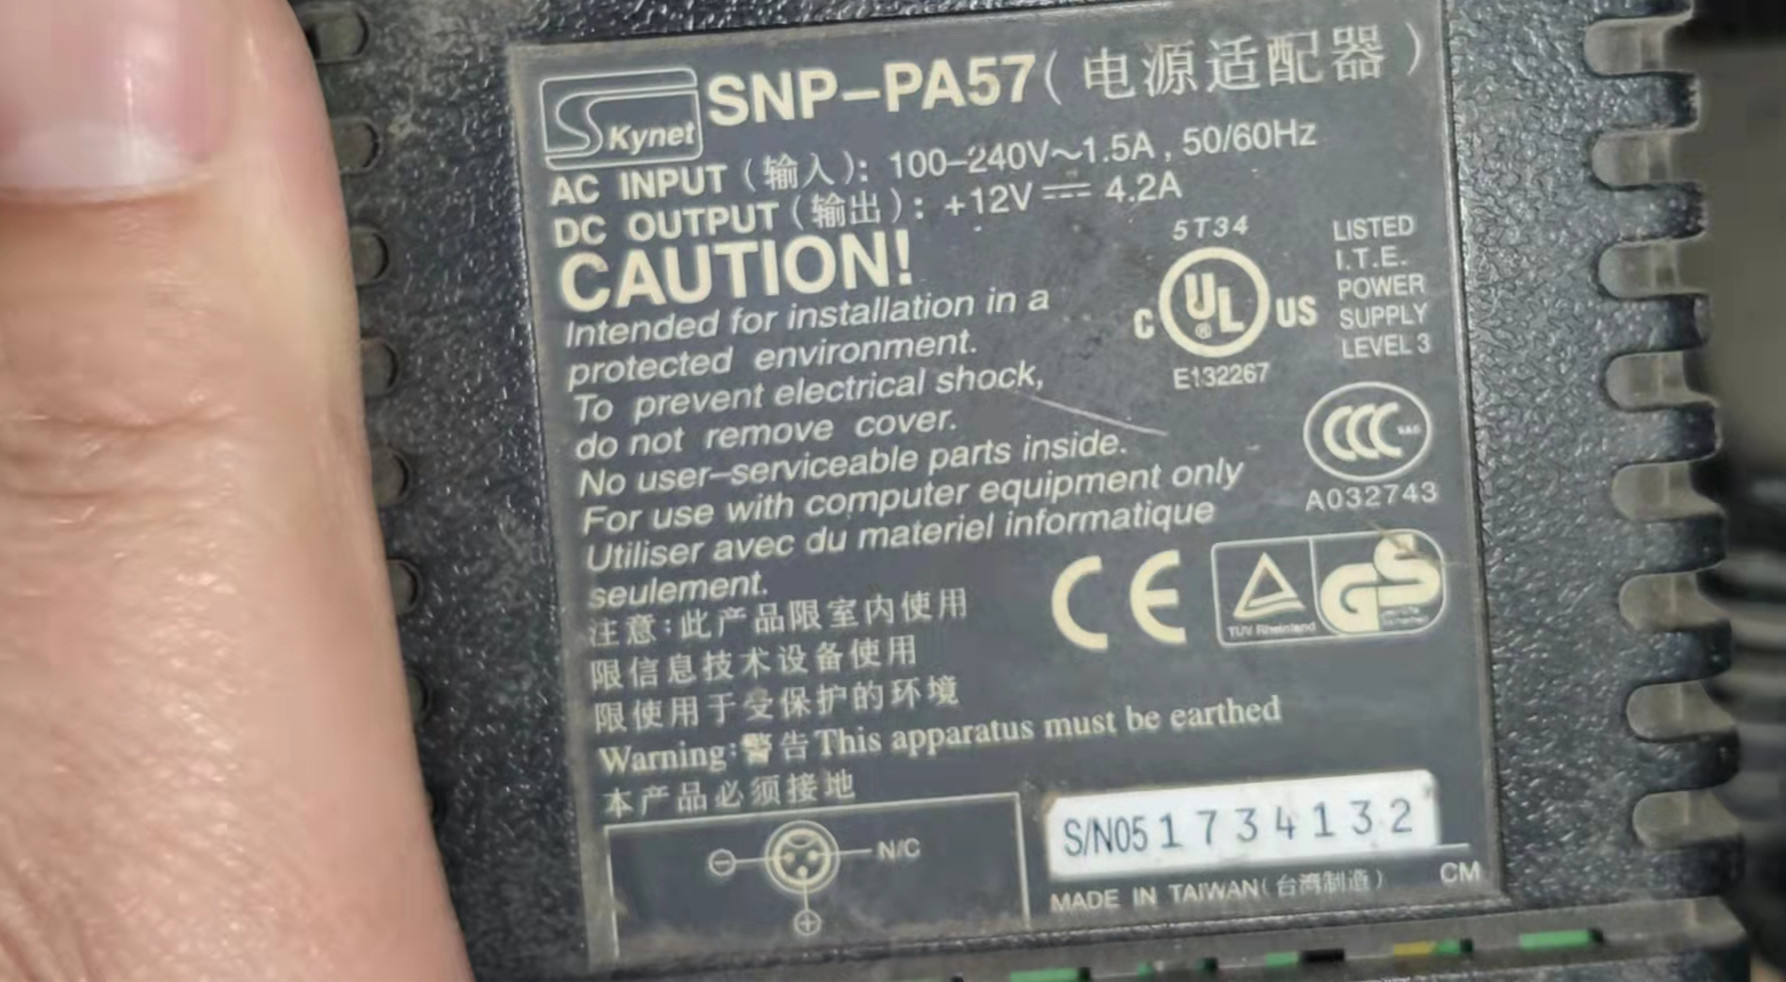 SKYNET SNP-PA57 12V/4.2A power adapter 3pin AC input: 100-240v 1.3a 50-60hz DC output: 12v 4.2a free power cord will fi - Click Image to Close